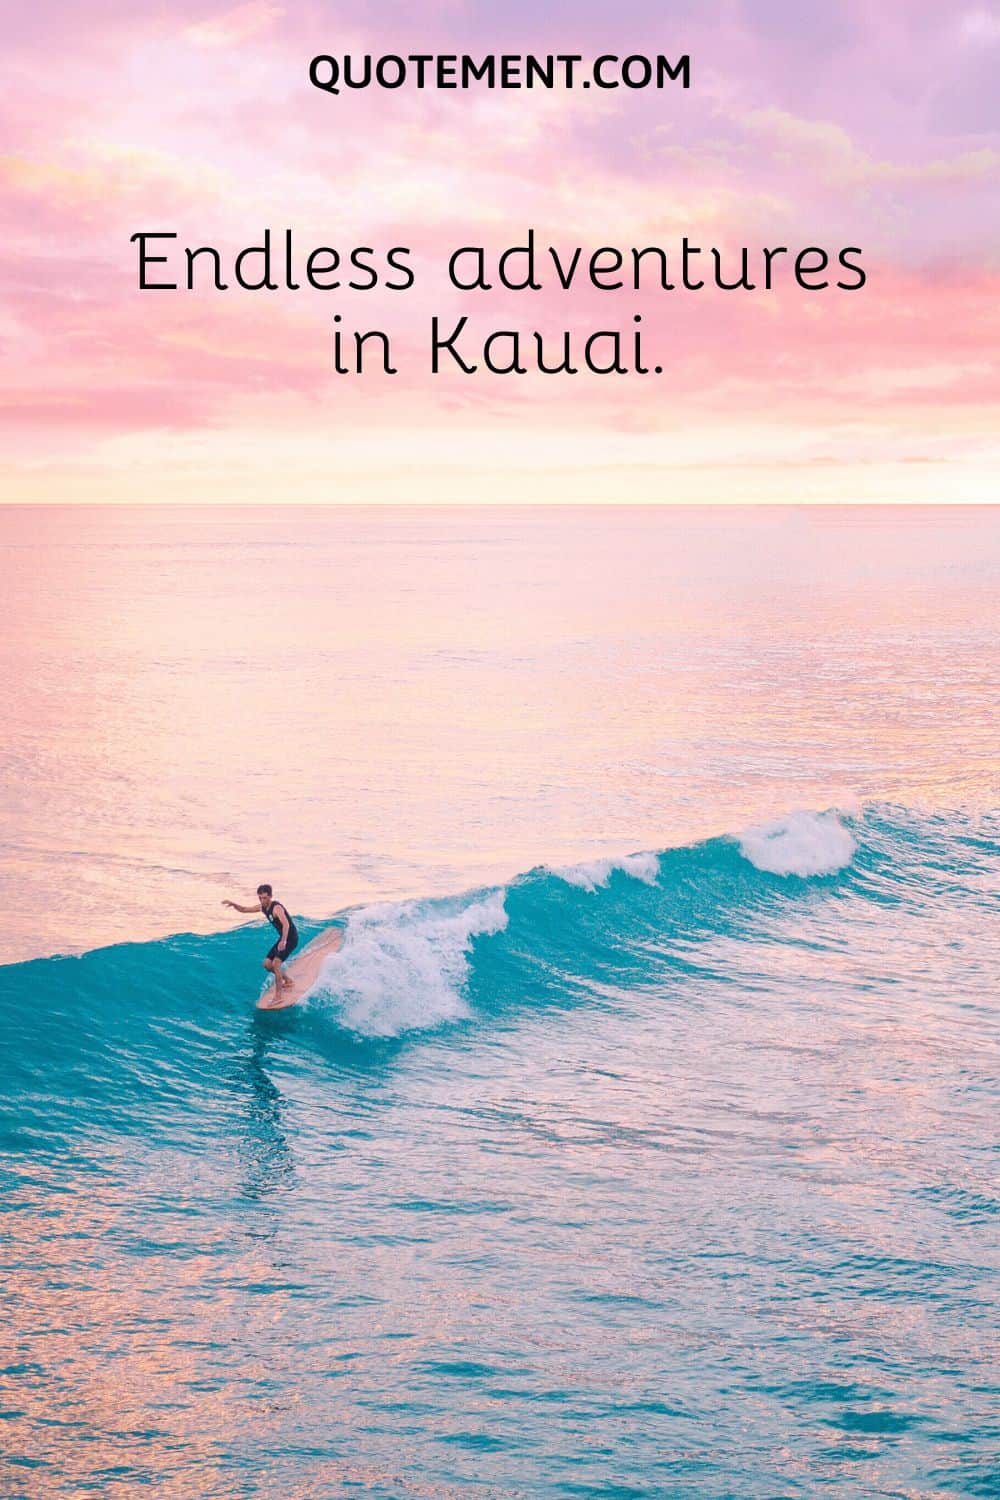 Endless adventures in Kauai.